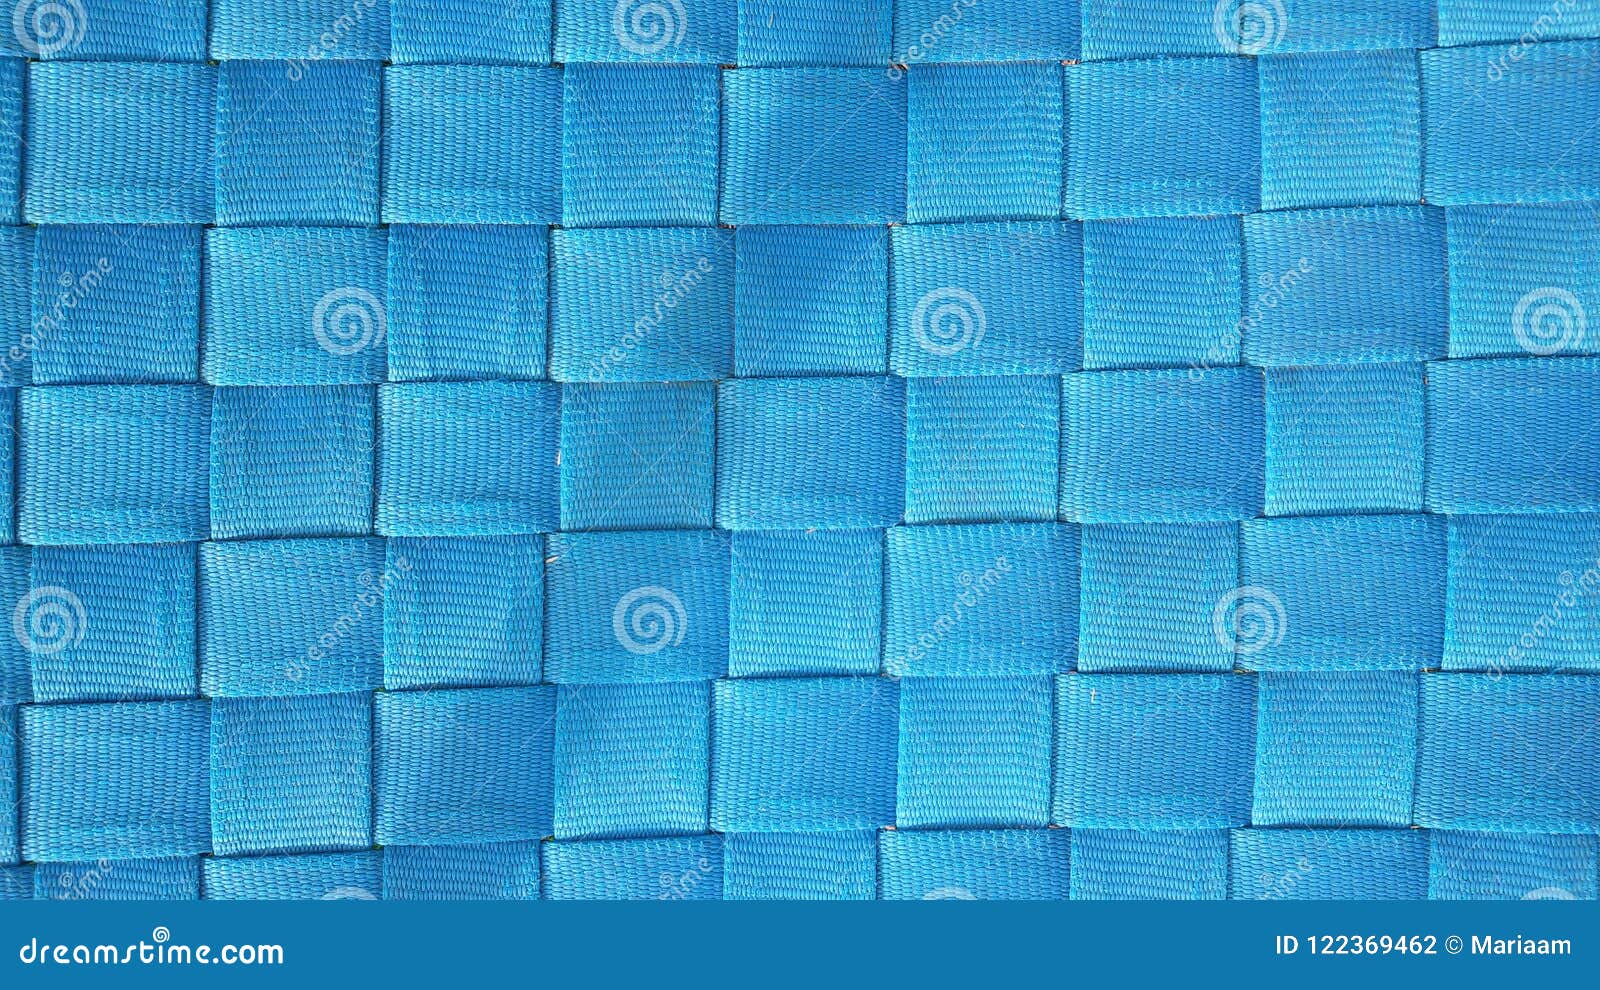 hammock squares background. beautiful bluish pattern